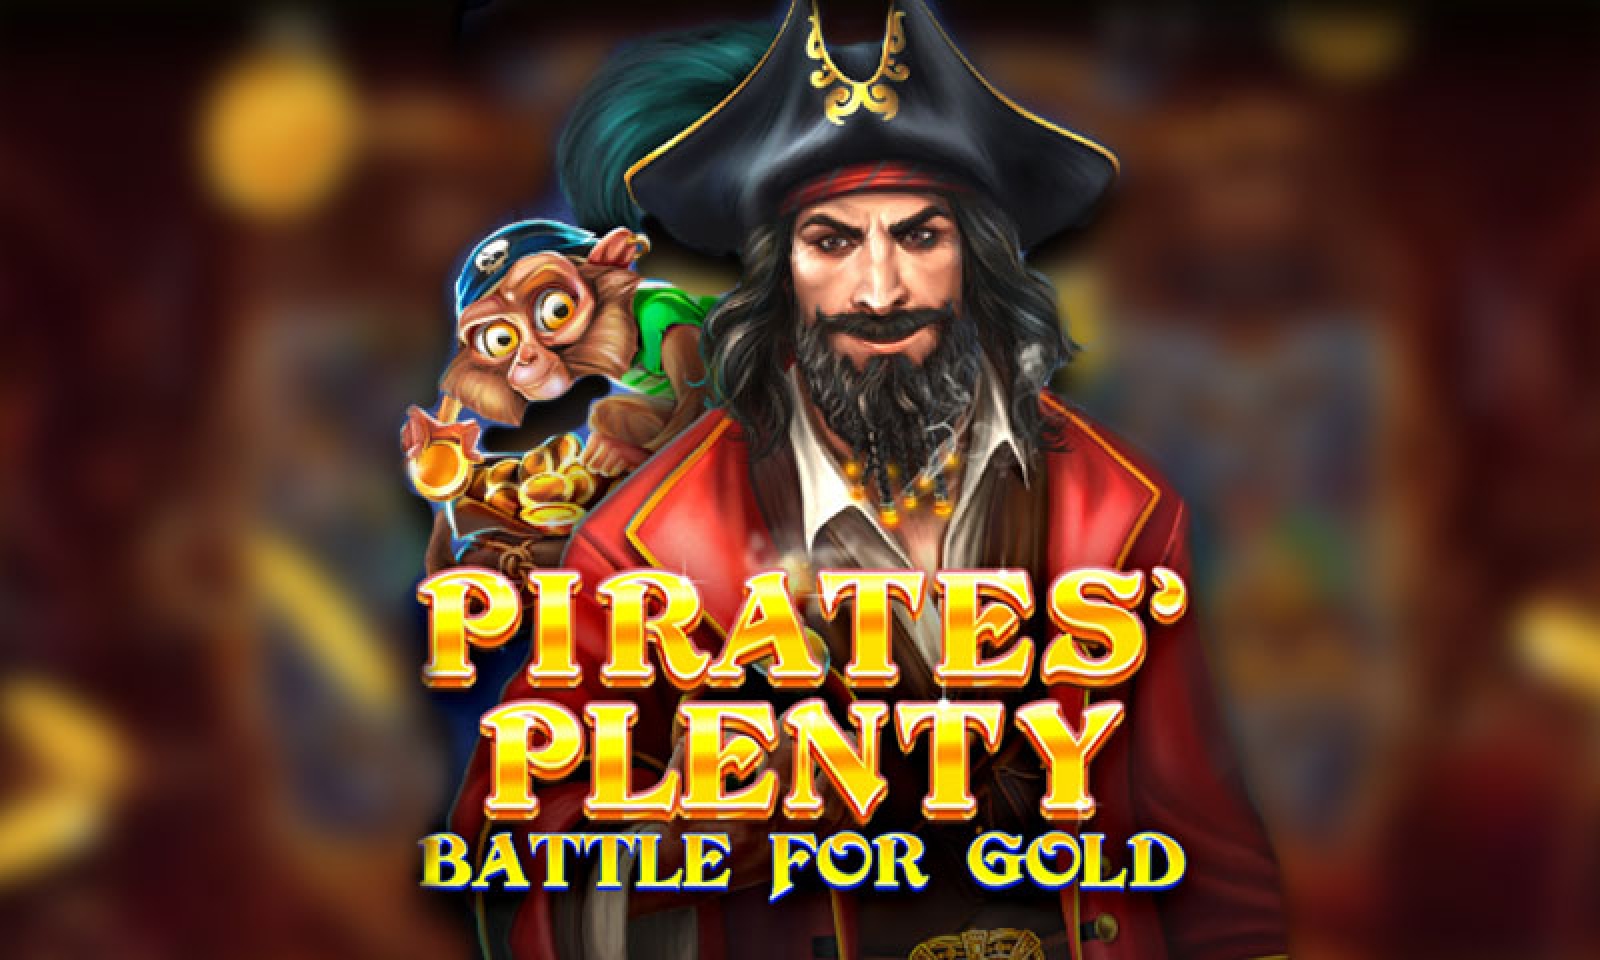 Pirates Plenty Battle for Gold demo